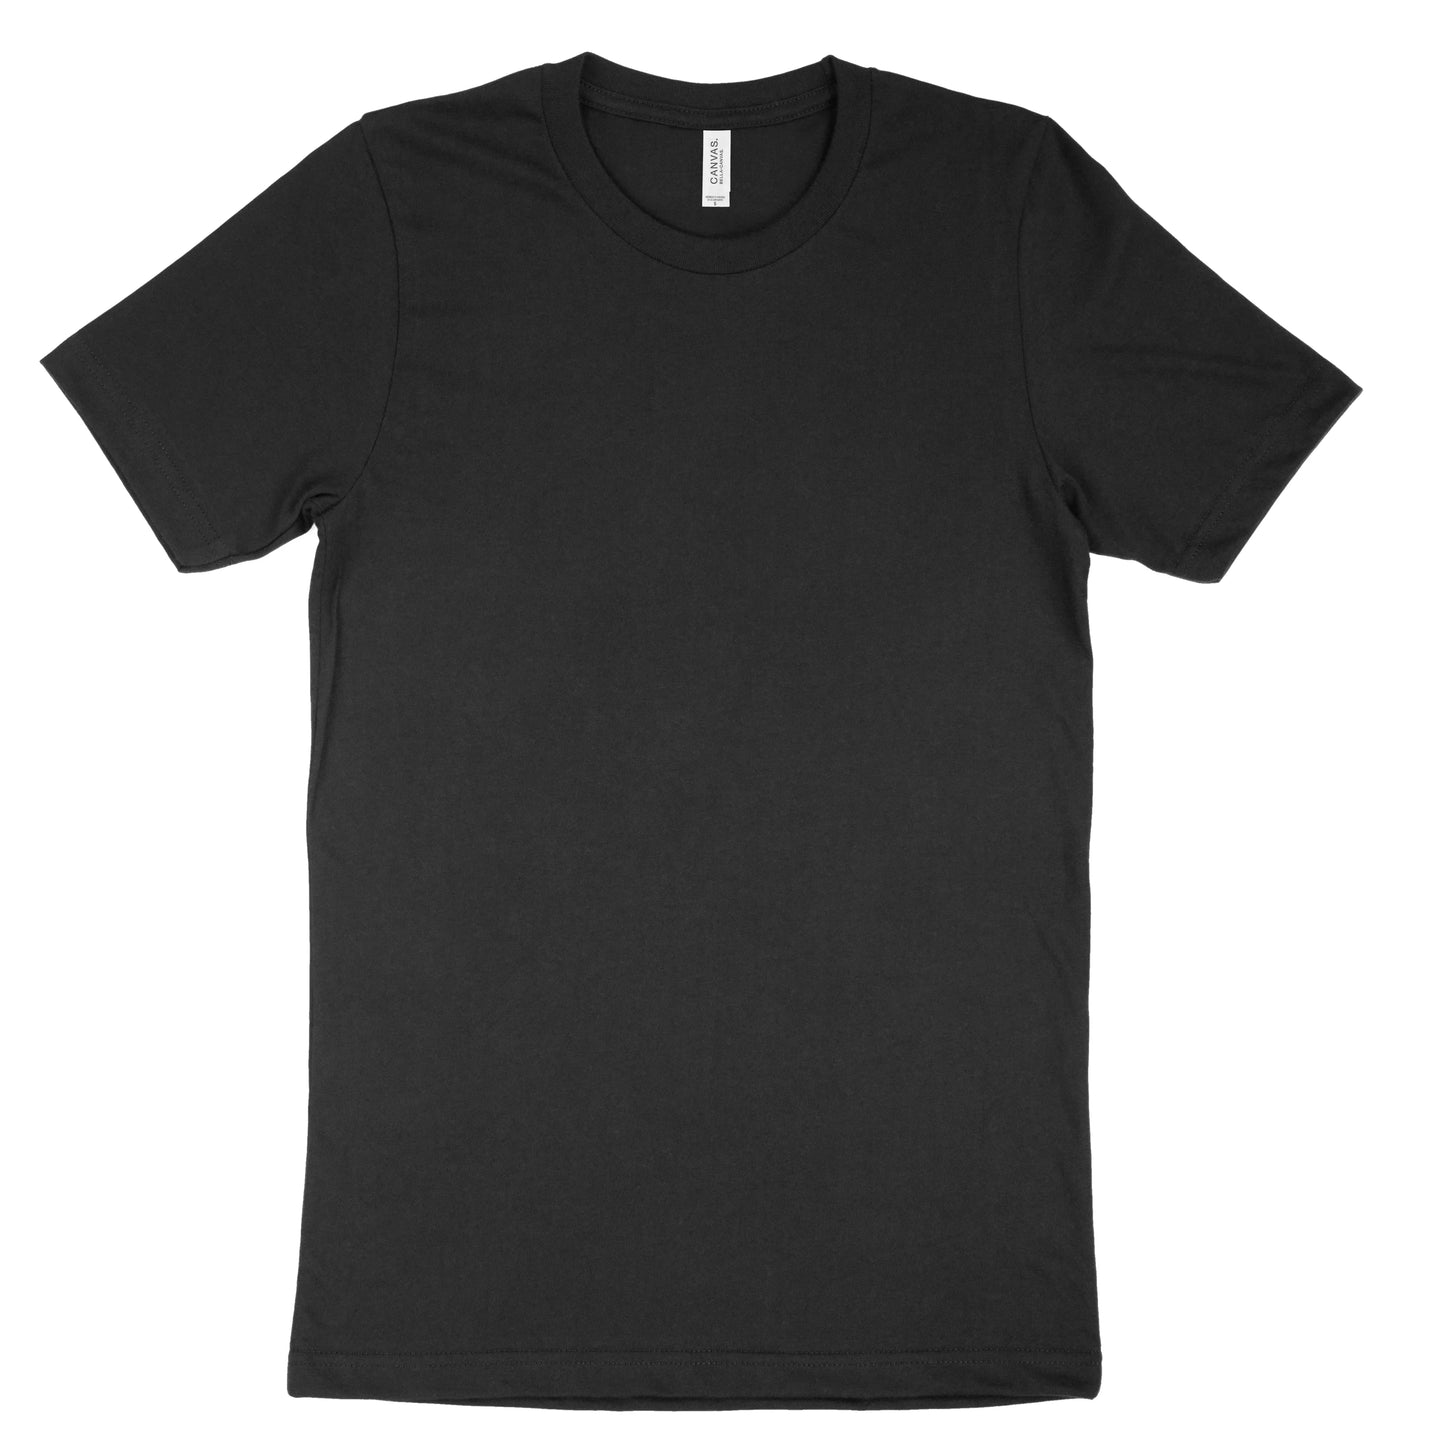 MerchBlue Union-Printed Custom T-shirt - Eco Design